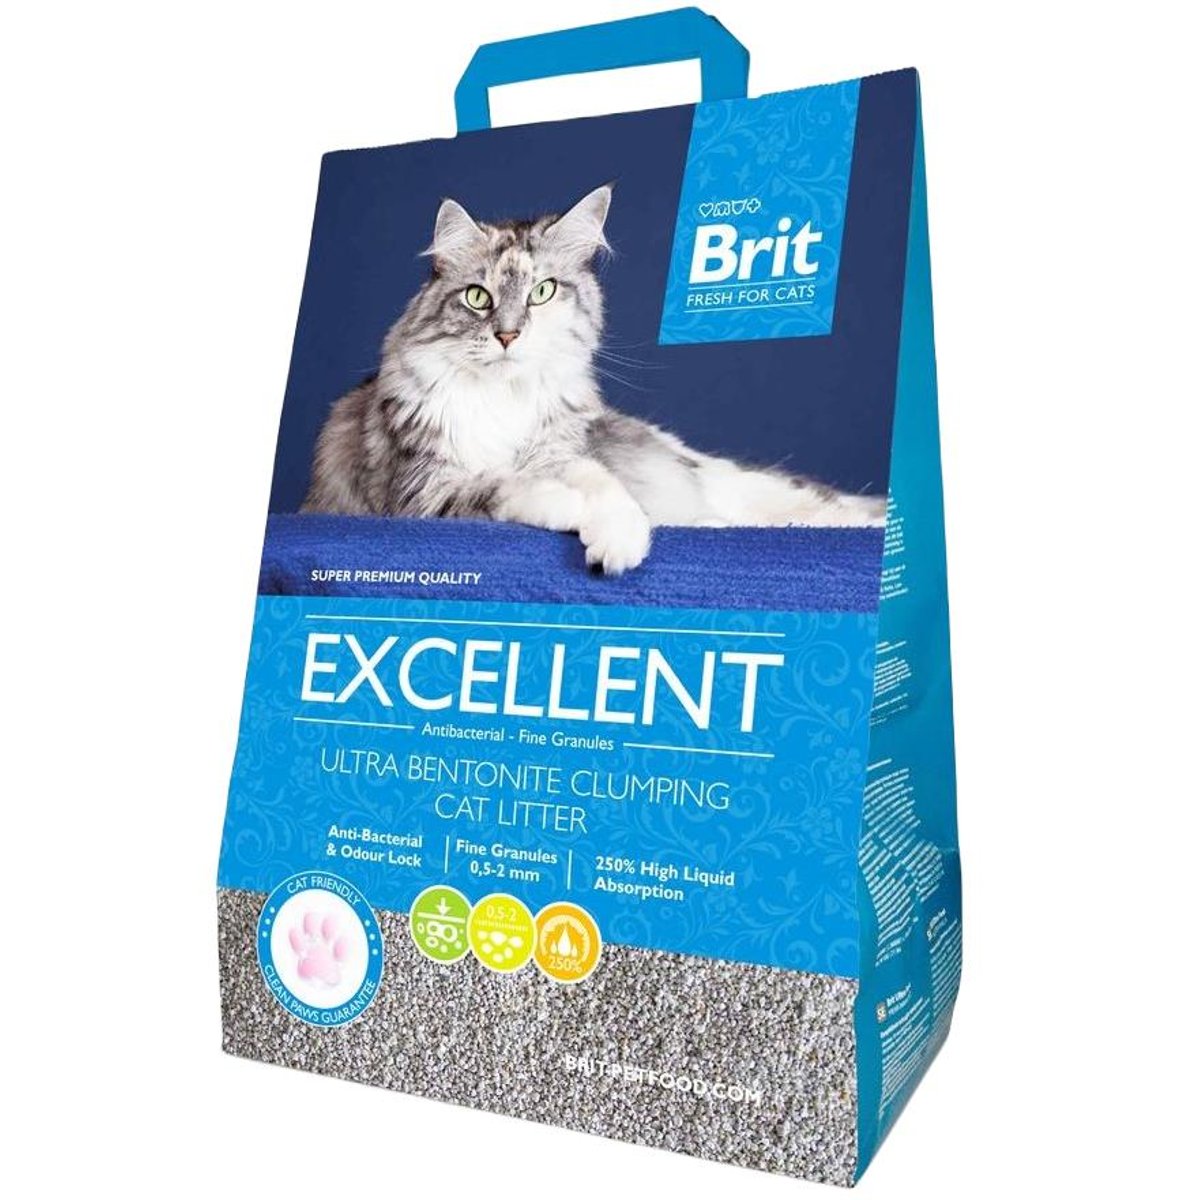 Brit Fresh for Cats Excellent Ultra Bentonite pro kočky